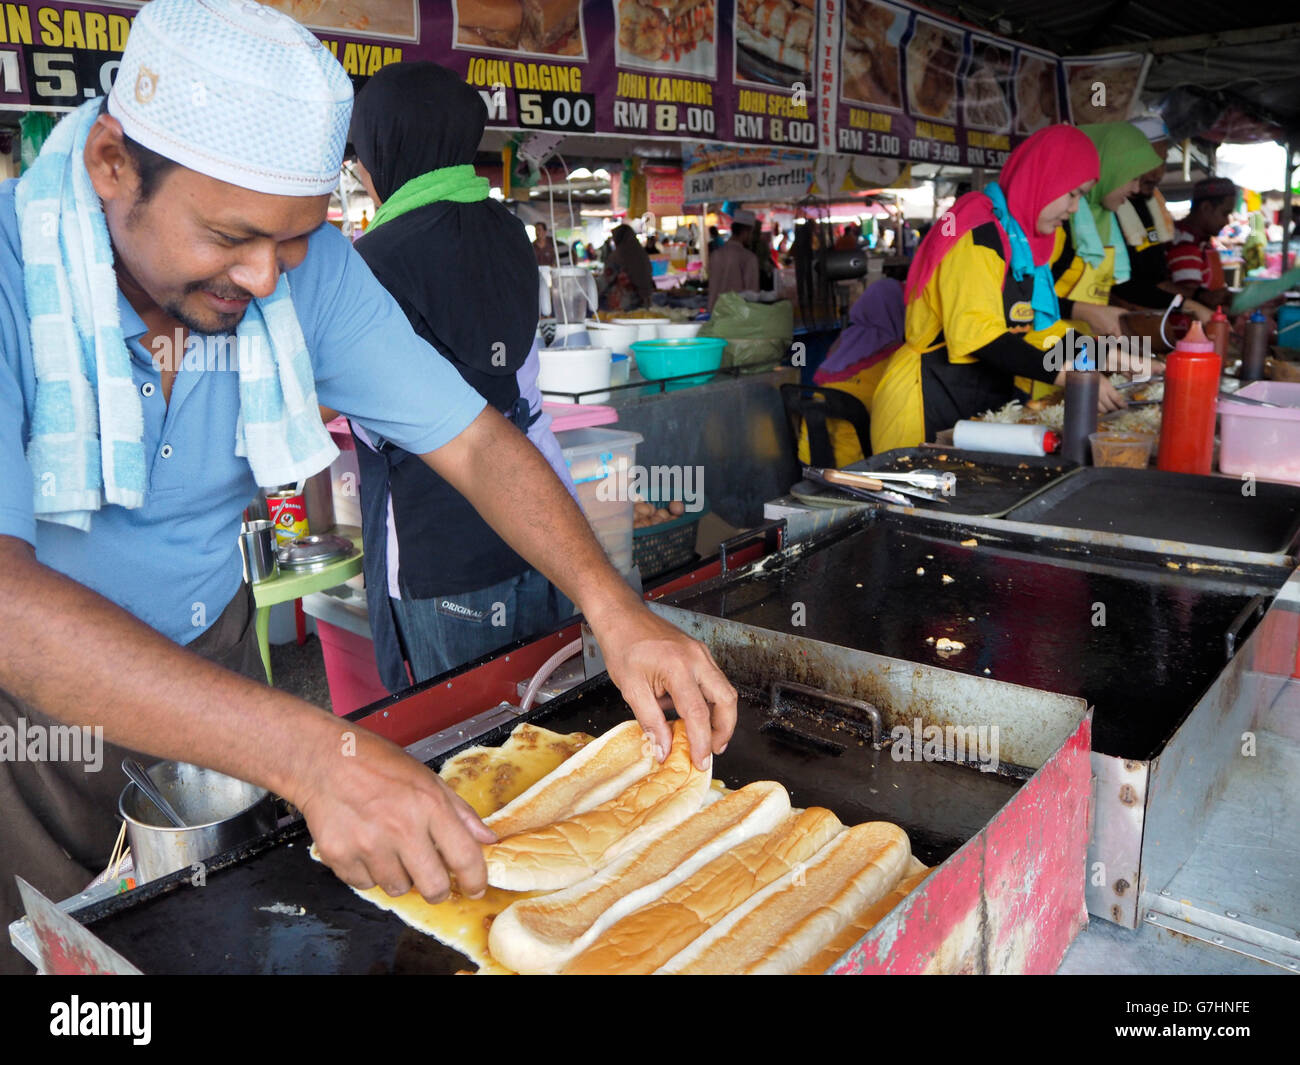 Food bazaar during the Muslim fasting month of Ramadan in Malaysia. Stock Photo